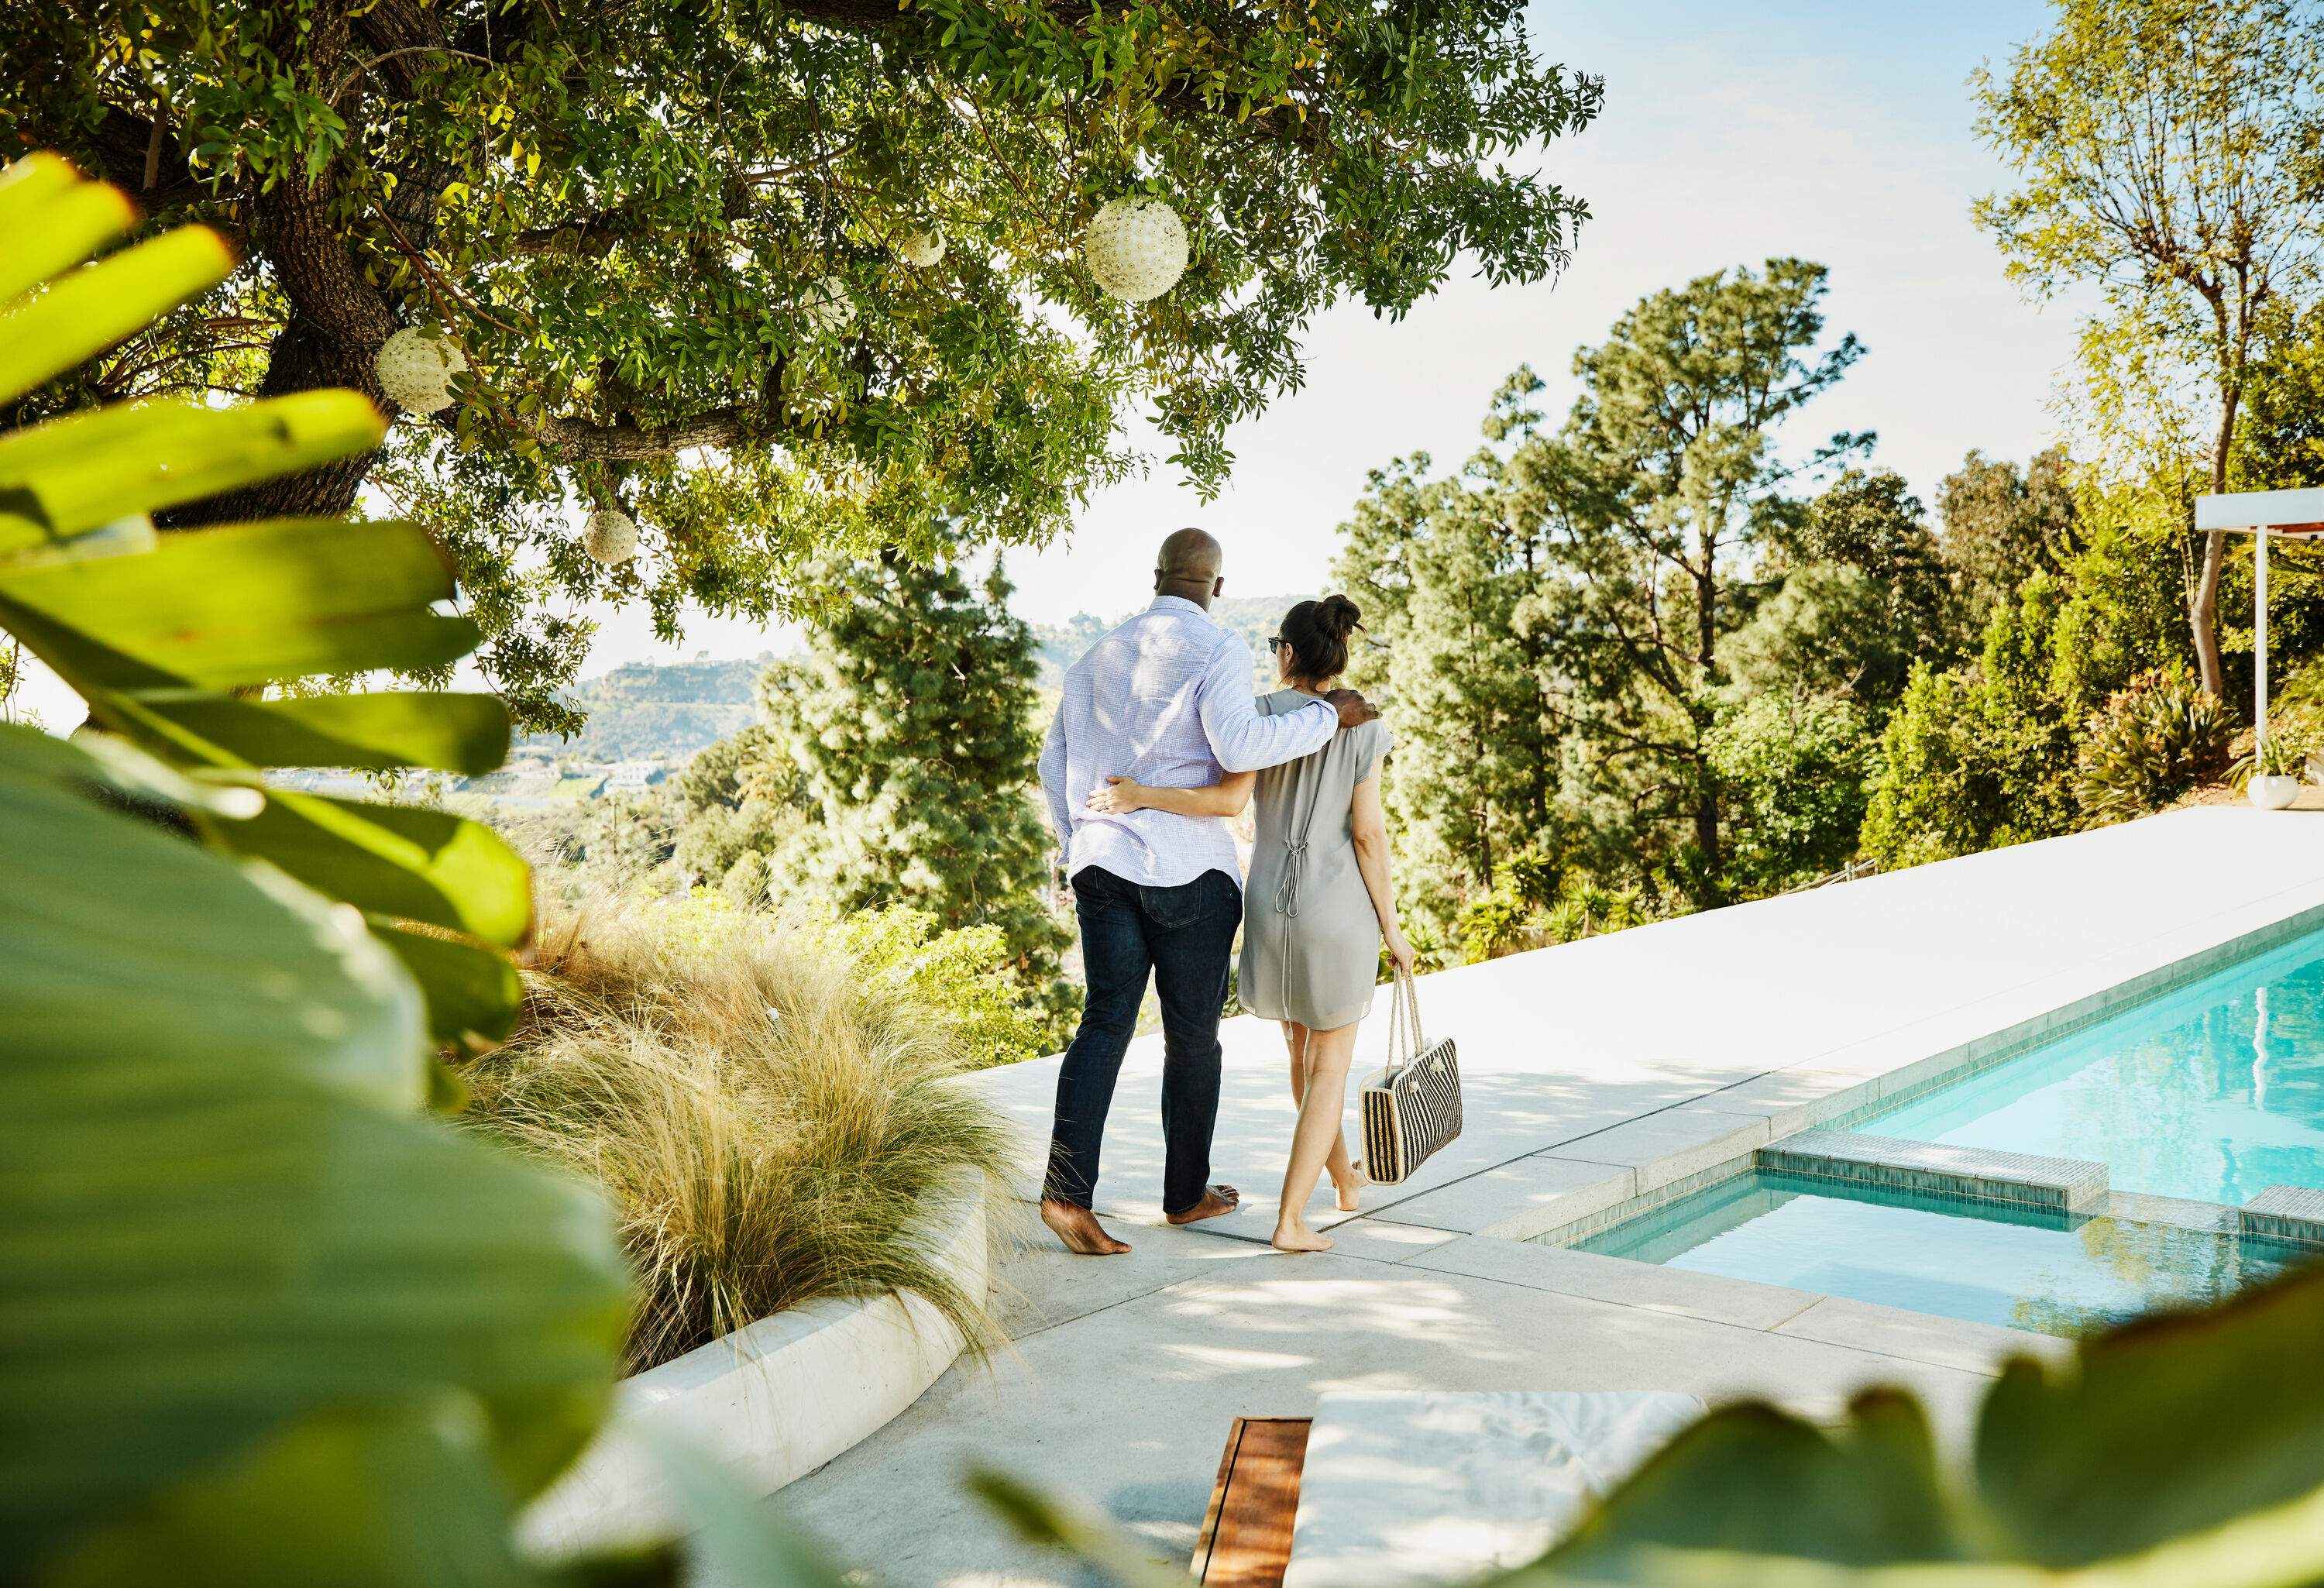 A couple embraces while walking beside a pool amongst lush foliage.